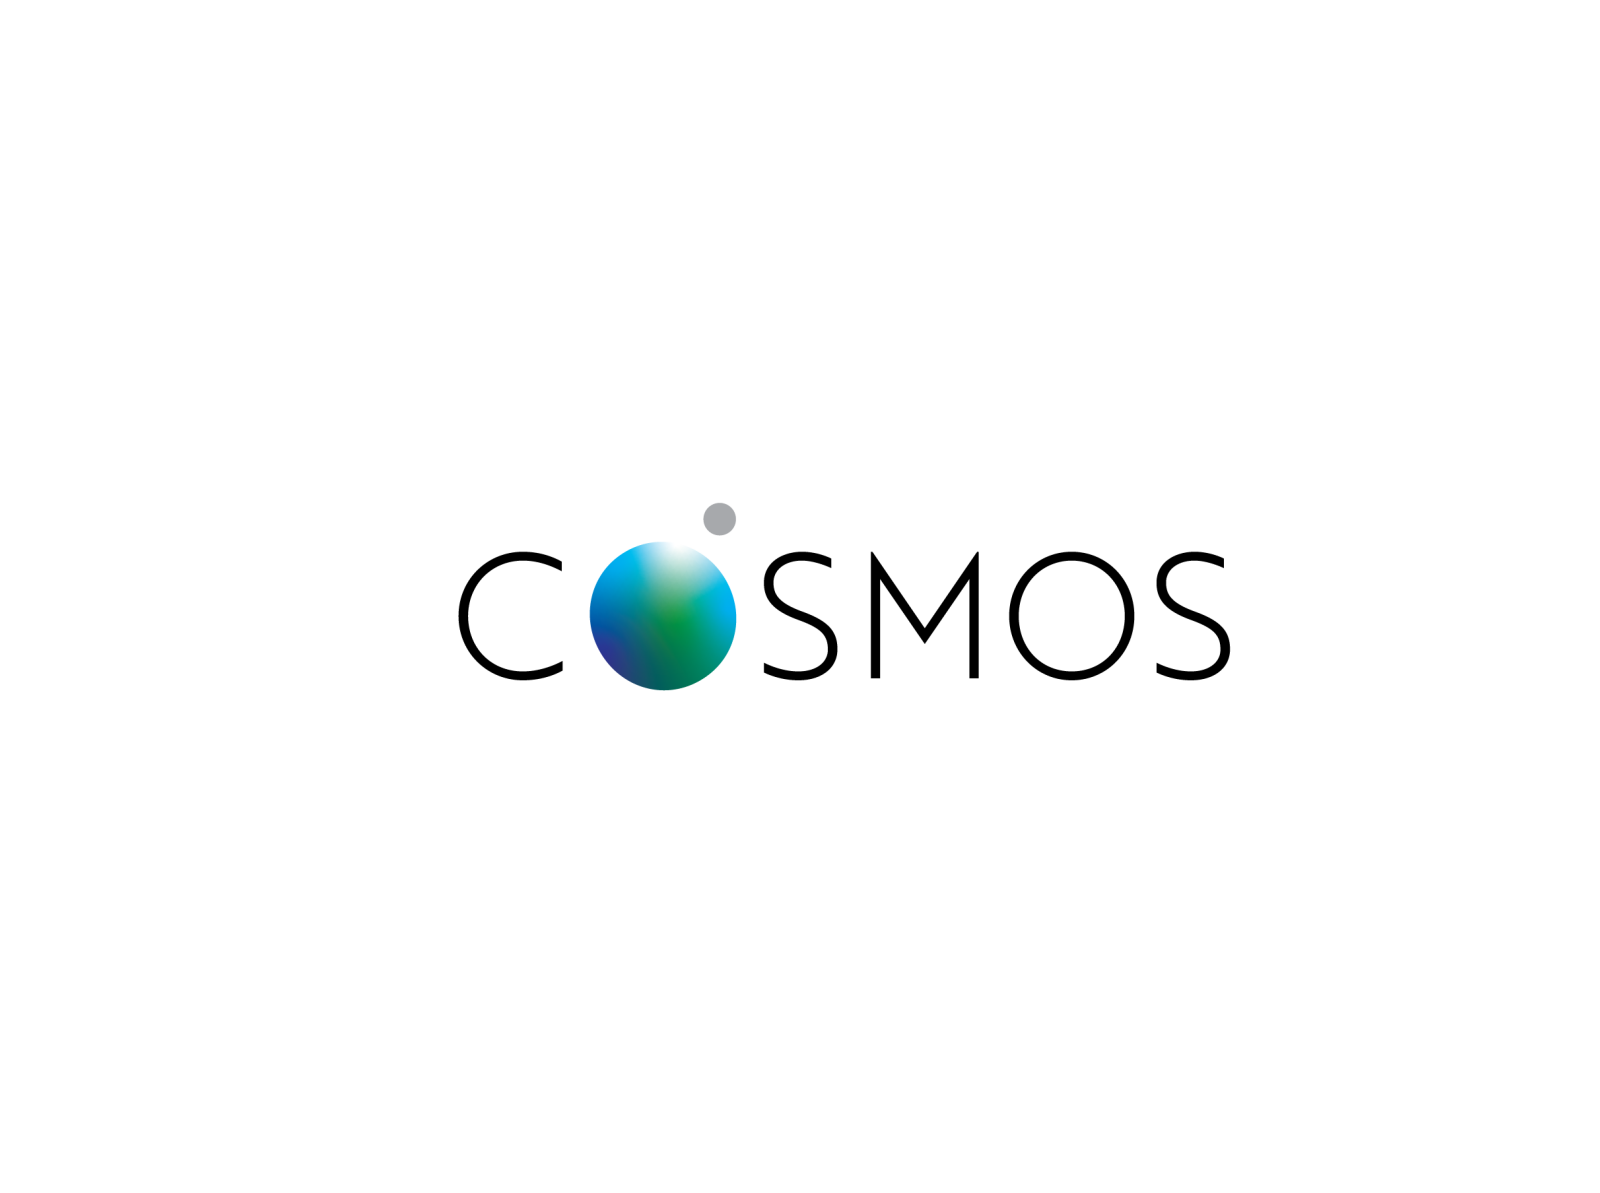 Cosmos logo by Studio One Design on Dribbble